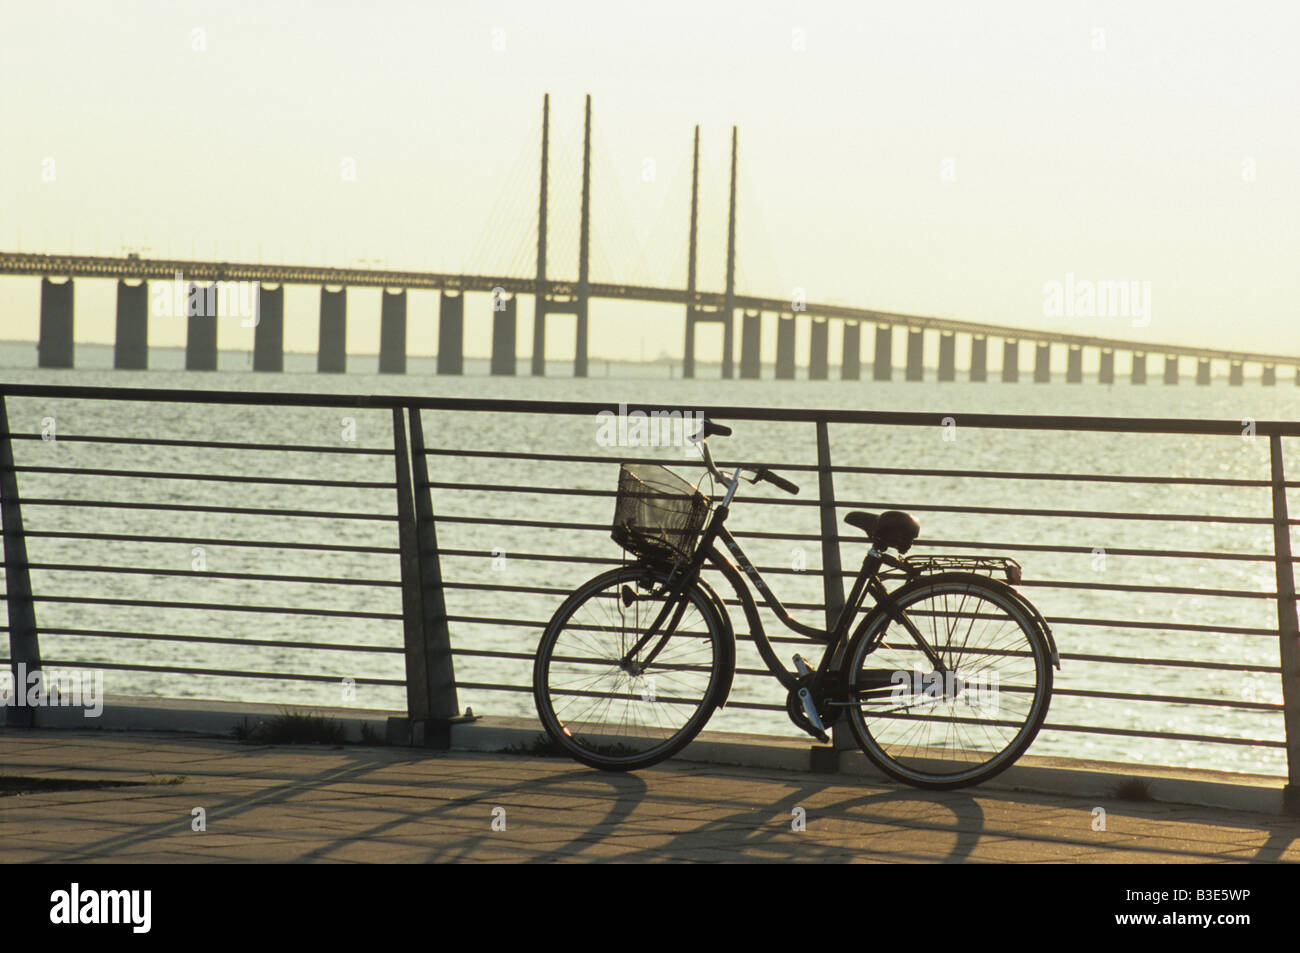 Bike on the viewing platform, Oresund bridge, Malmo, Sweden Stock Photo -  Alamy